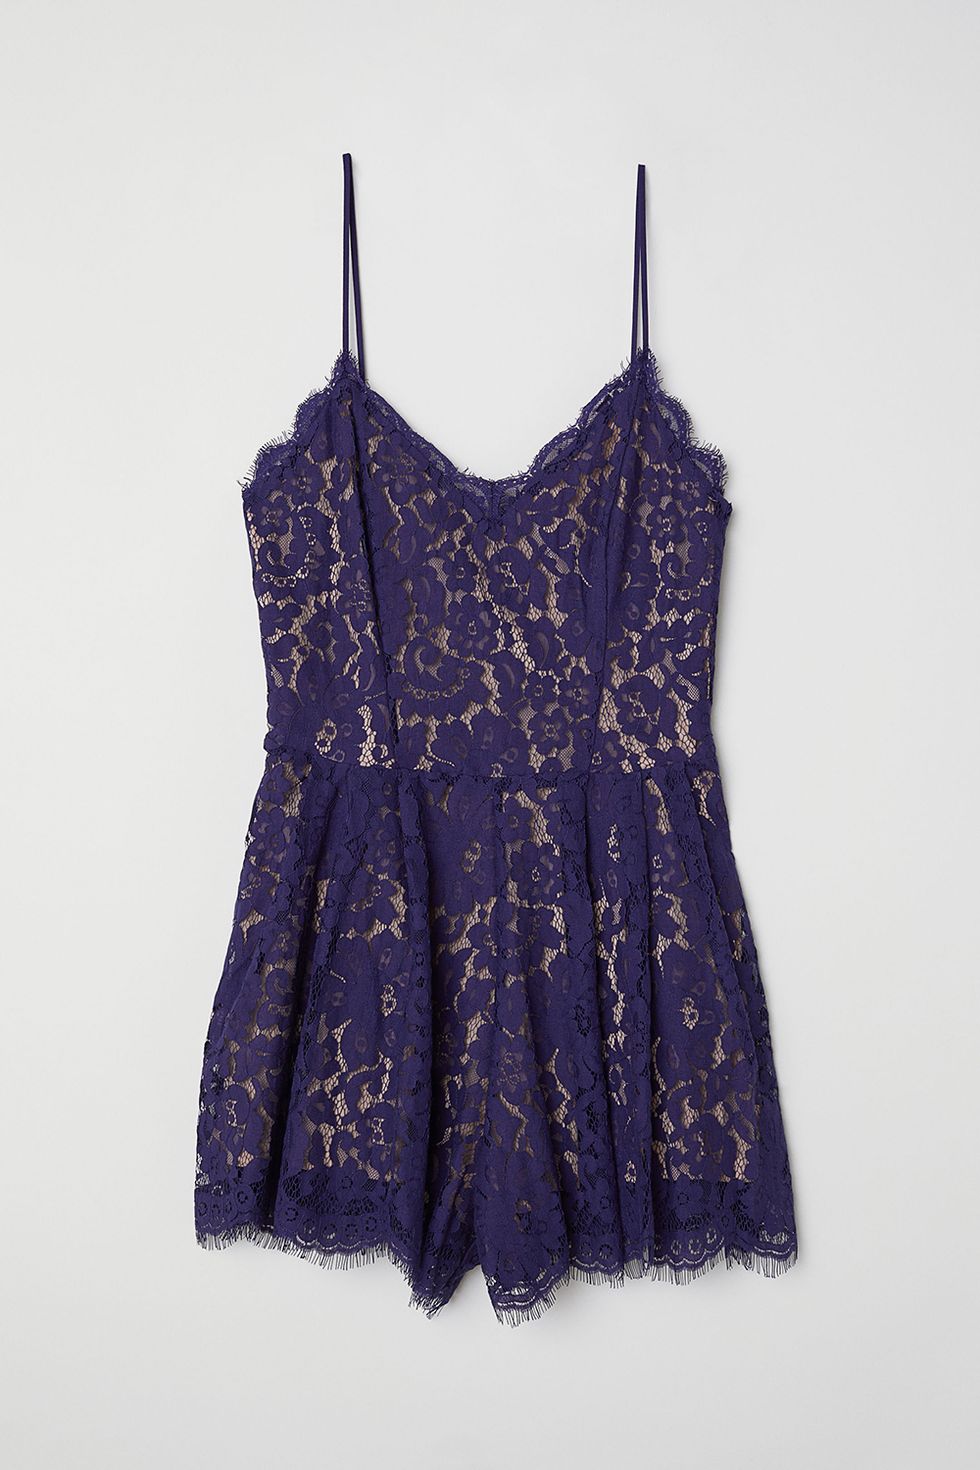 Clothing, Blue, Purple, Dress, Day dress, Violet, One-piece garment, Cocktail dress, camisoles, Sleeveless shirt, 